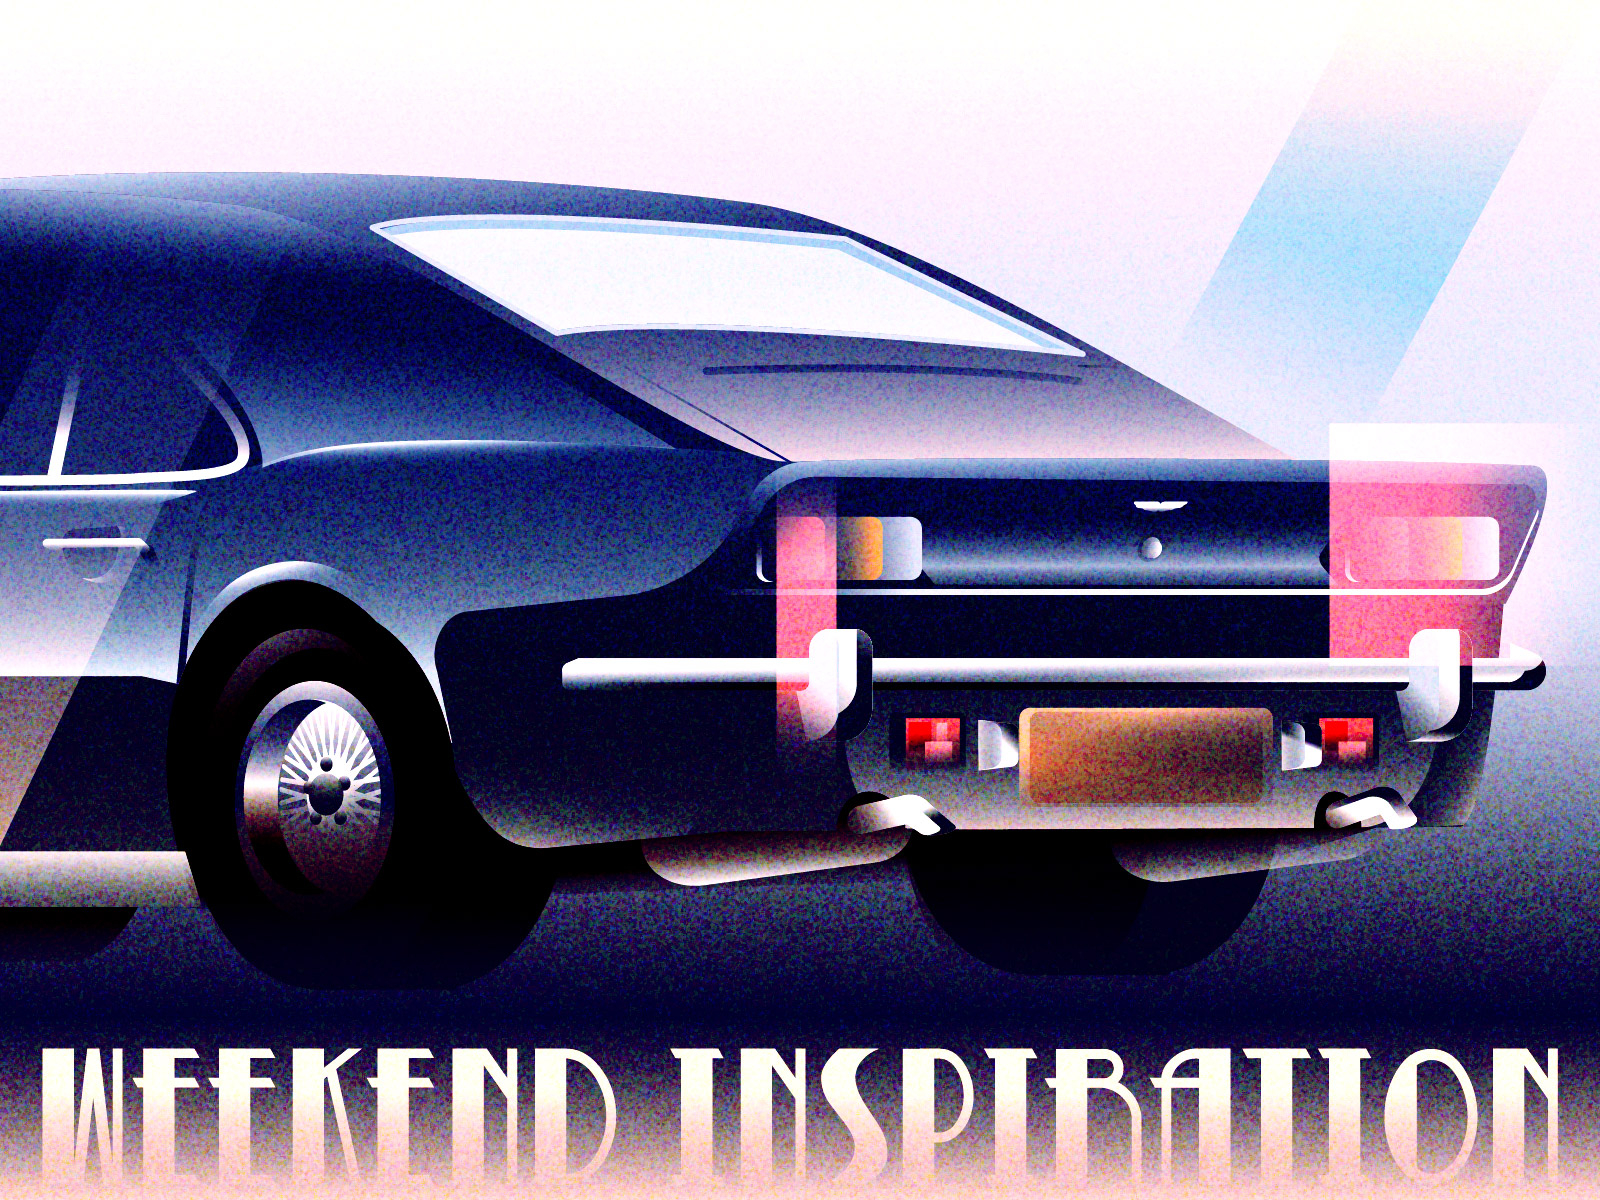 Weekend Inspiration - 1974 Aston Martin Lagonda Saloon retro 1970s texture car aston martin vintage illustration